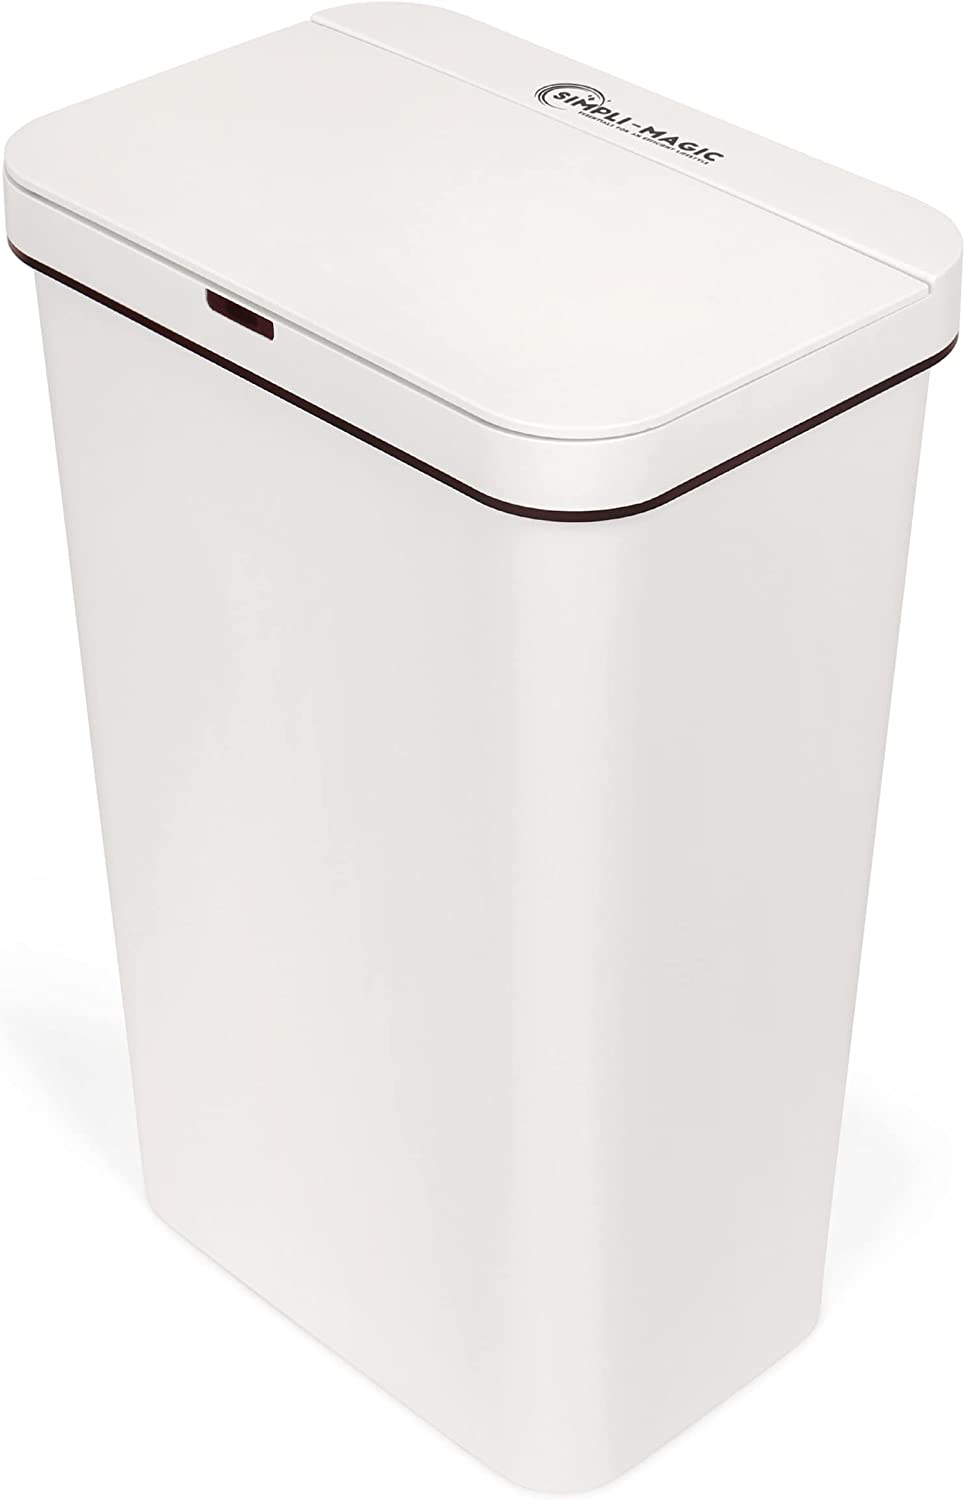 Sensor Trash Can (13 Gallon)- Rectangle – The Clean Store